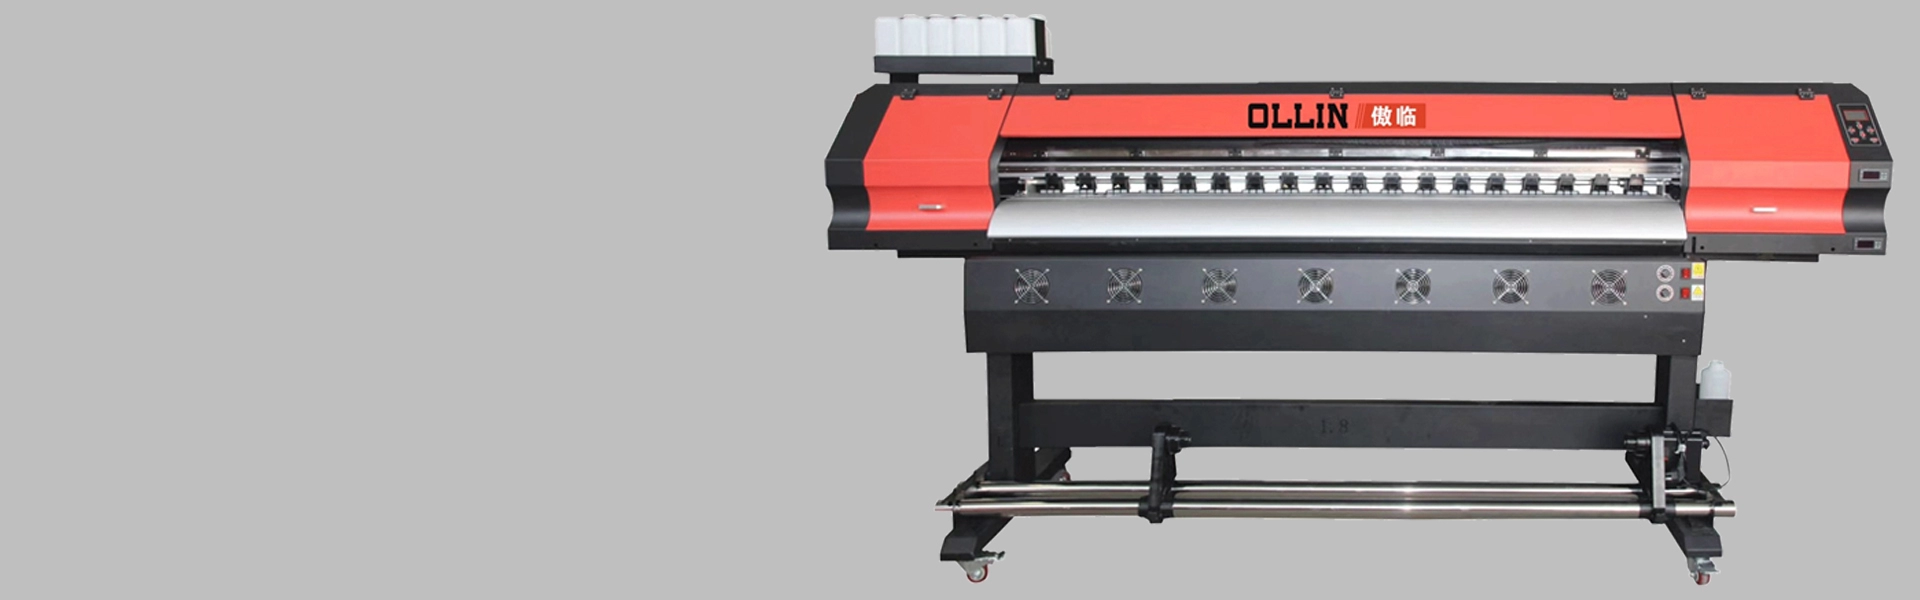 1.9m Sublimation Printer Machine OL-190